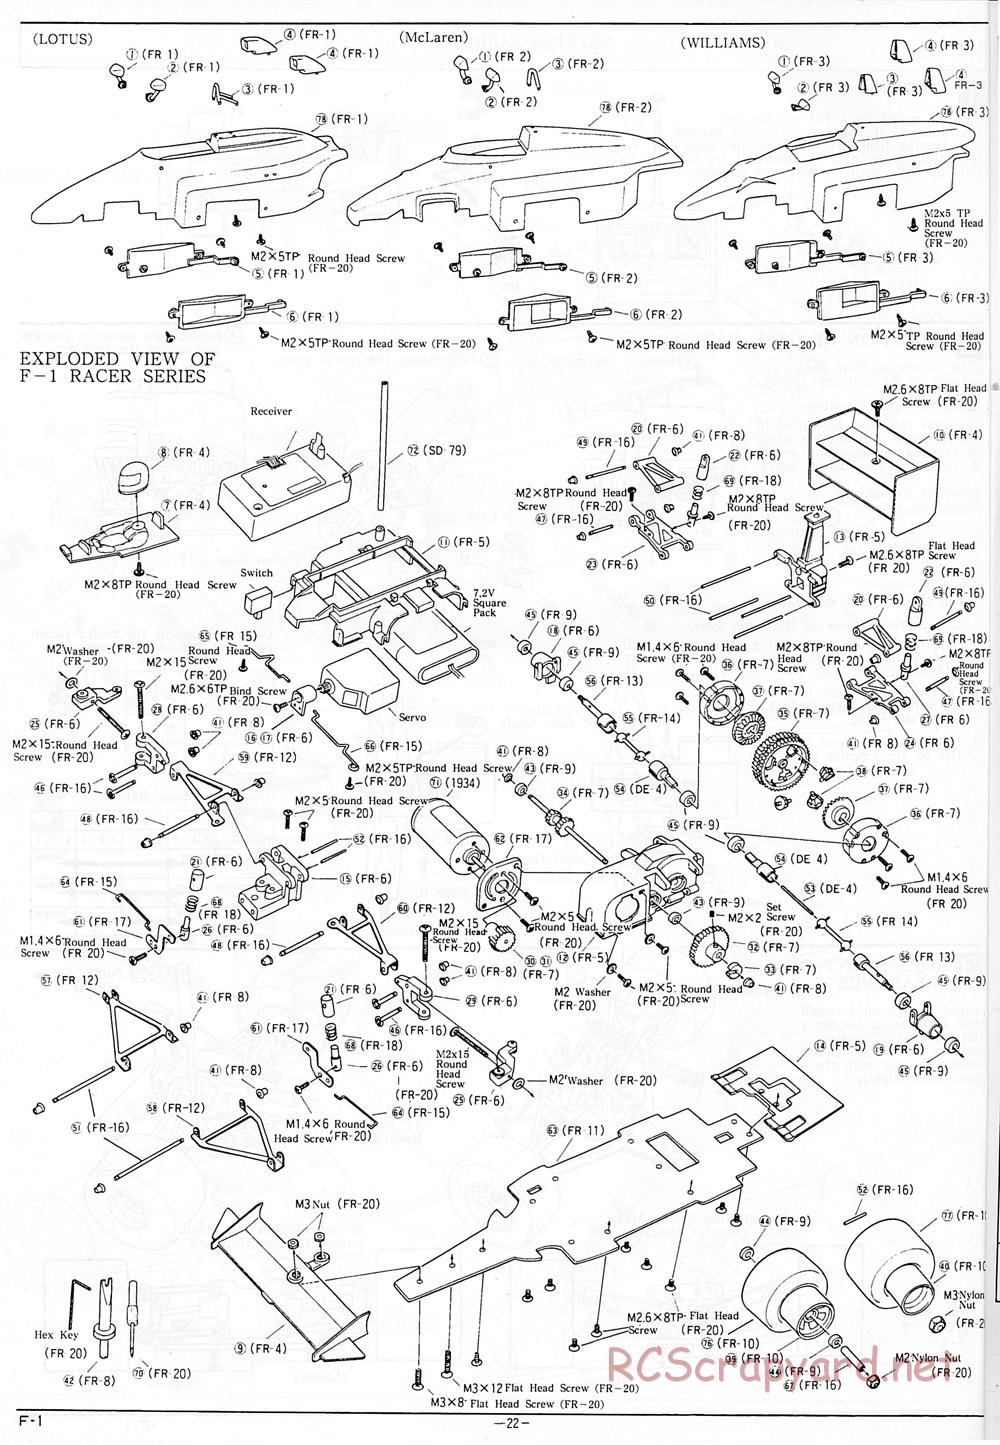 Kyosho - 1/18 Scale Formula One (F1) - Manual - Page 22